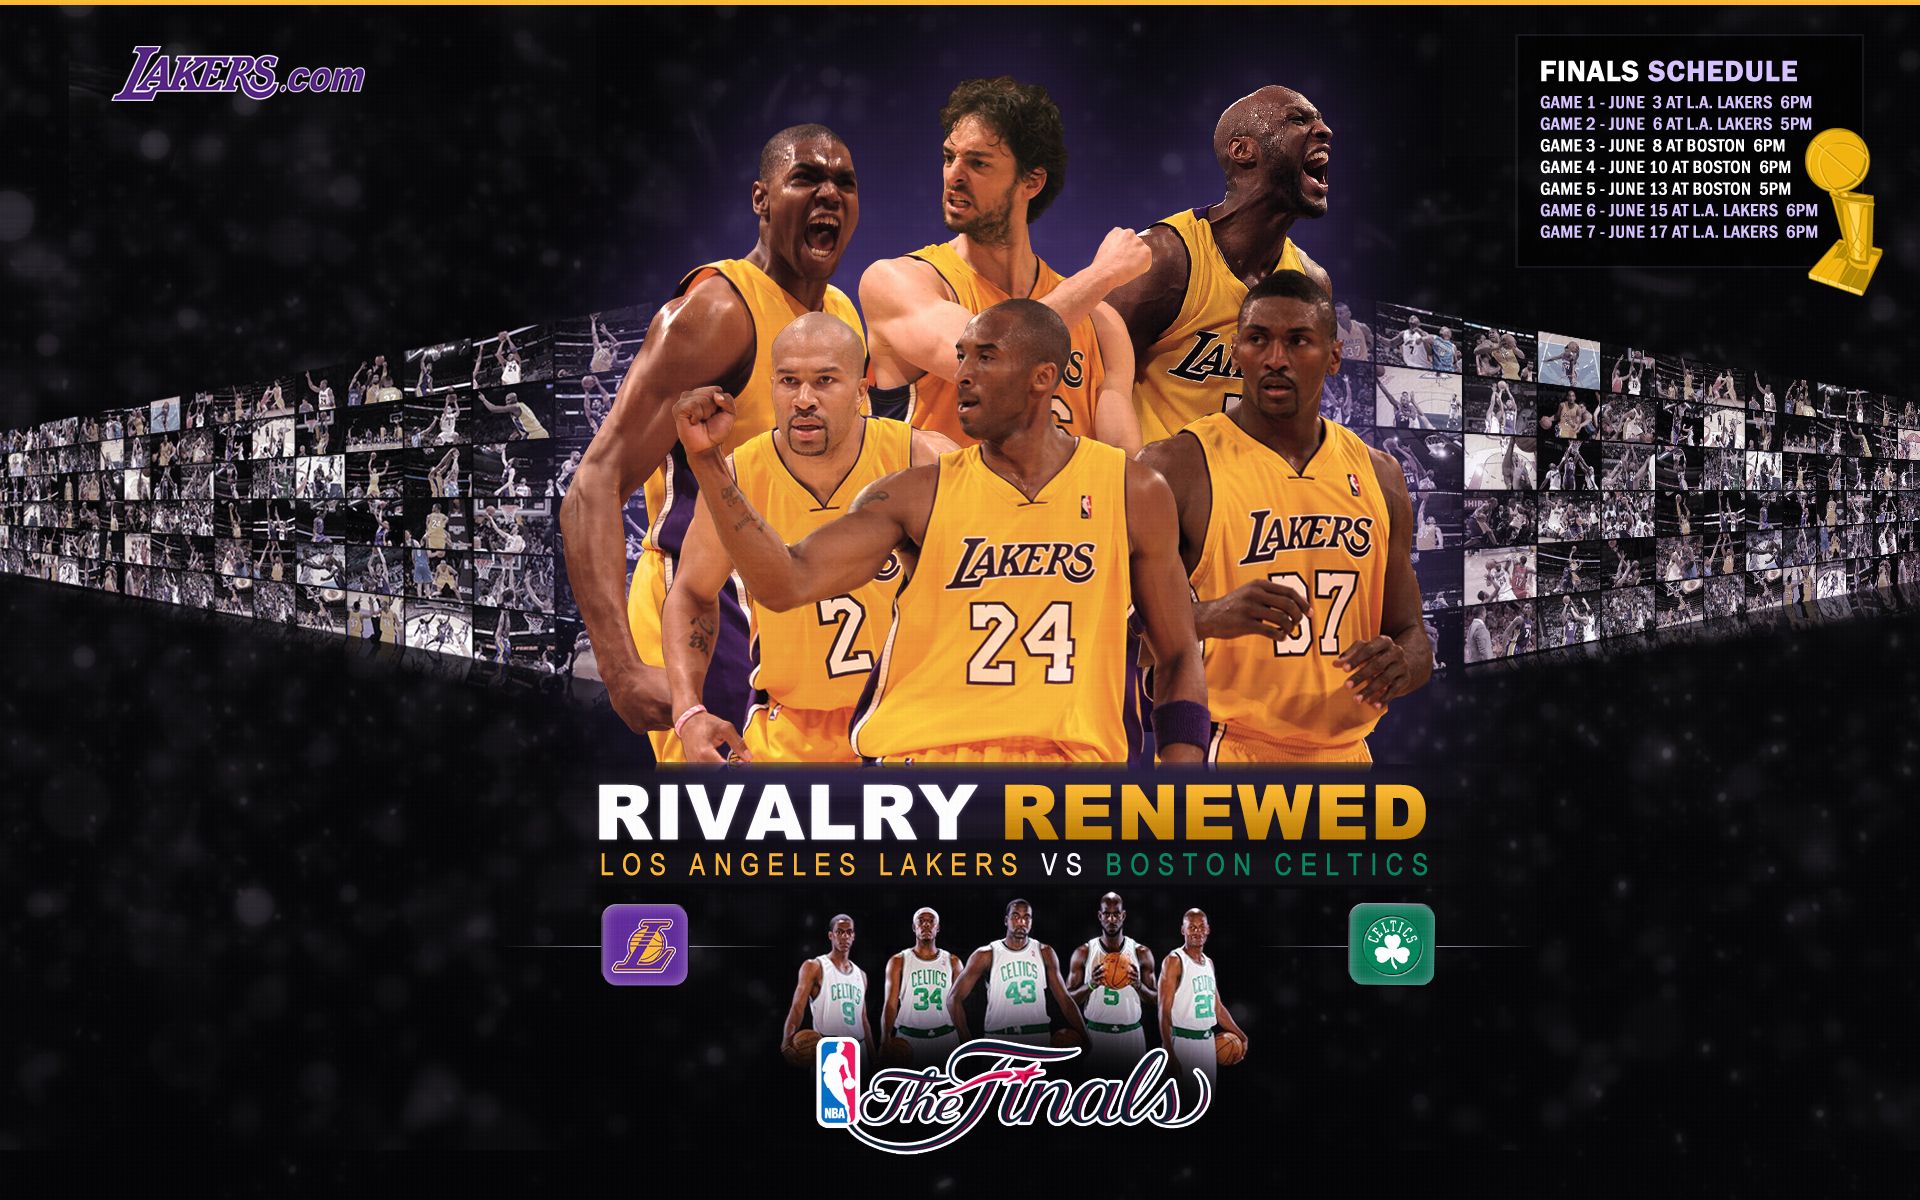 The finals как пригласить. Лейкерс 2010. Финал НБА 2010. Lakers обои. Вся команда Lakers.